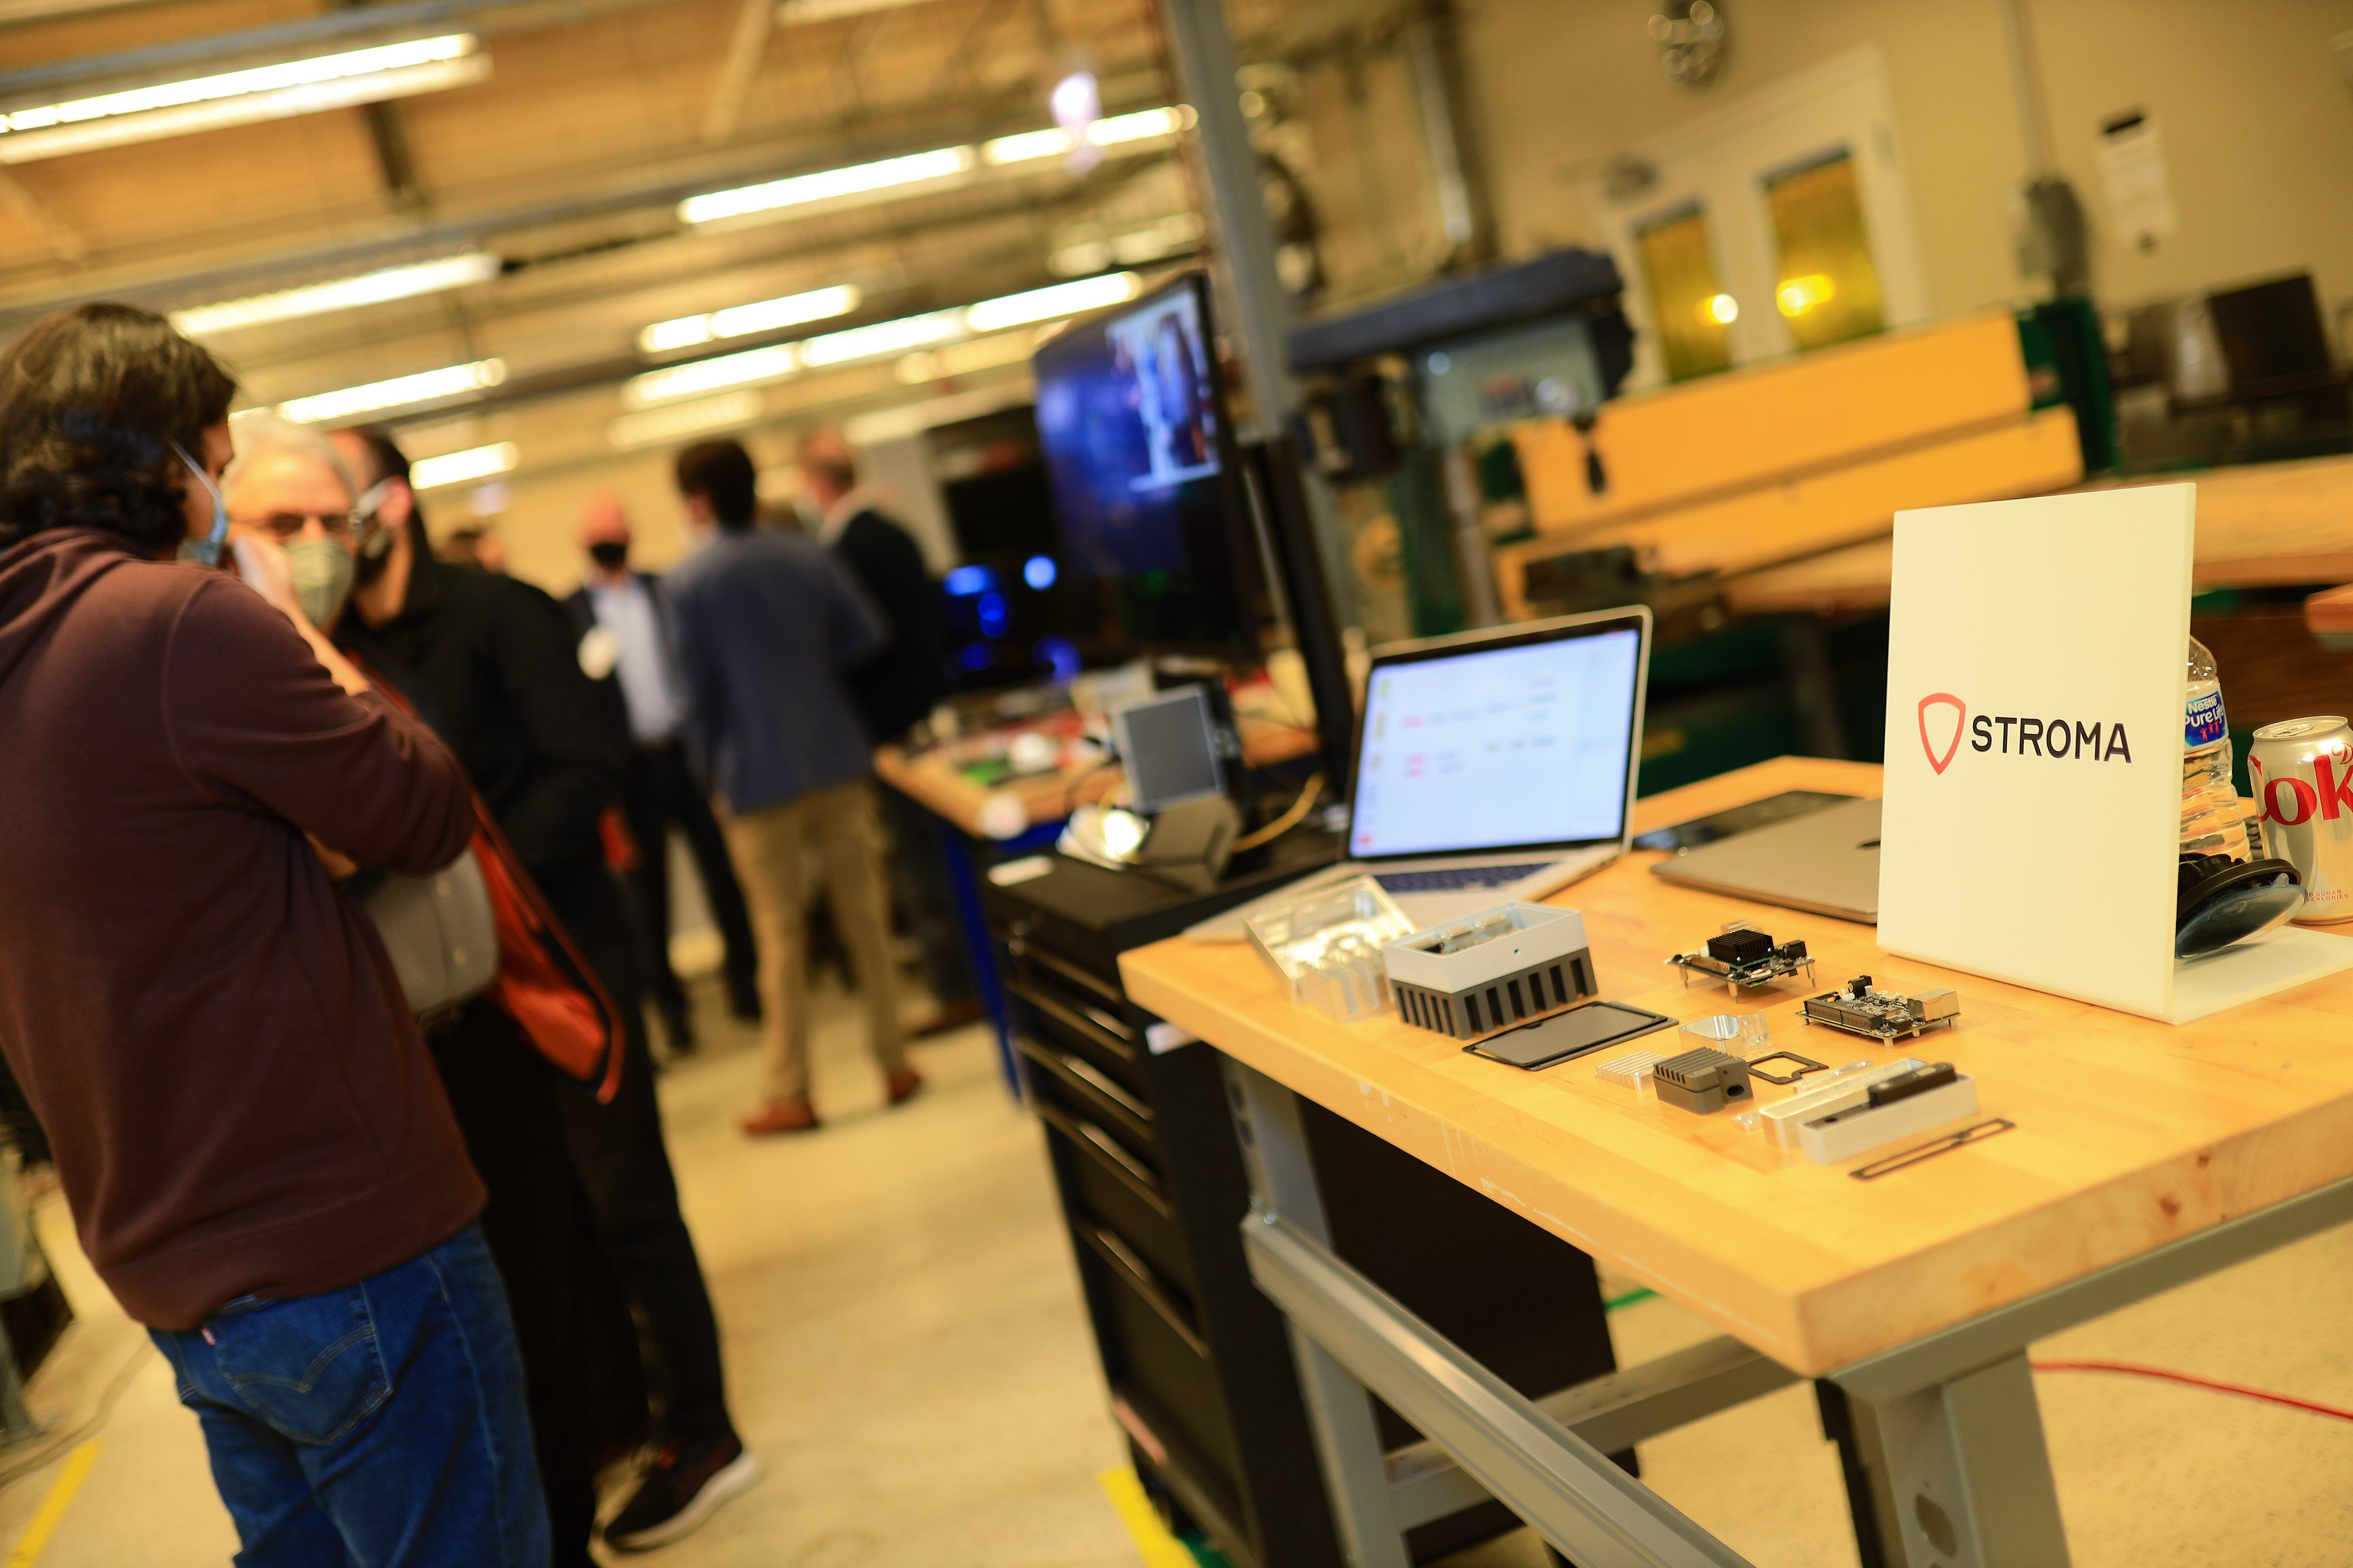 Award-Winning Entrepreneurs Propel their Industrial IoT Startup at mHUB